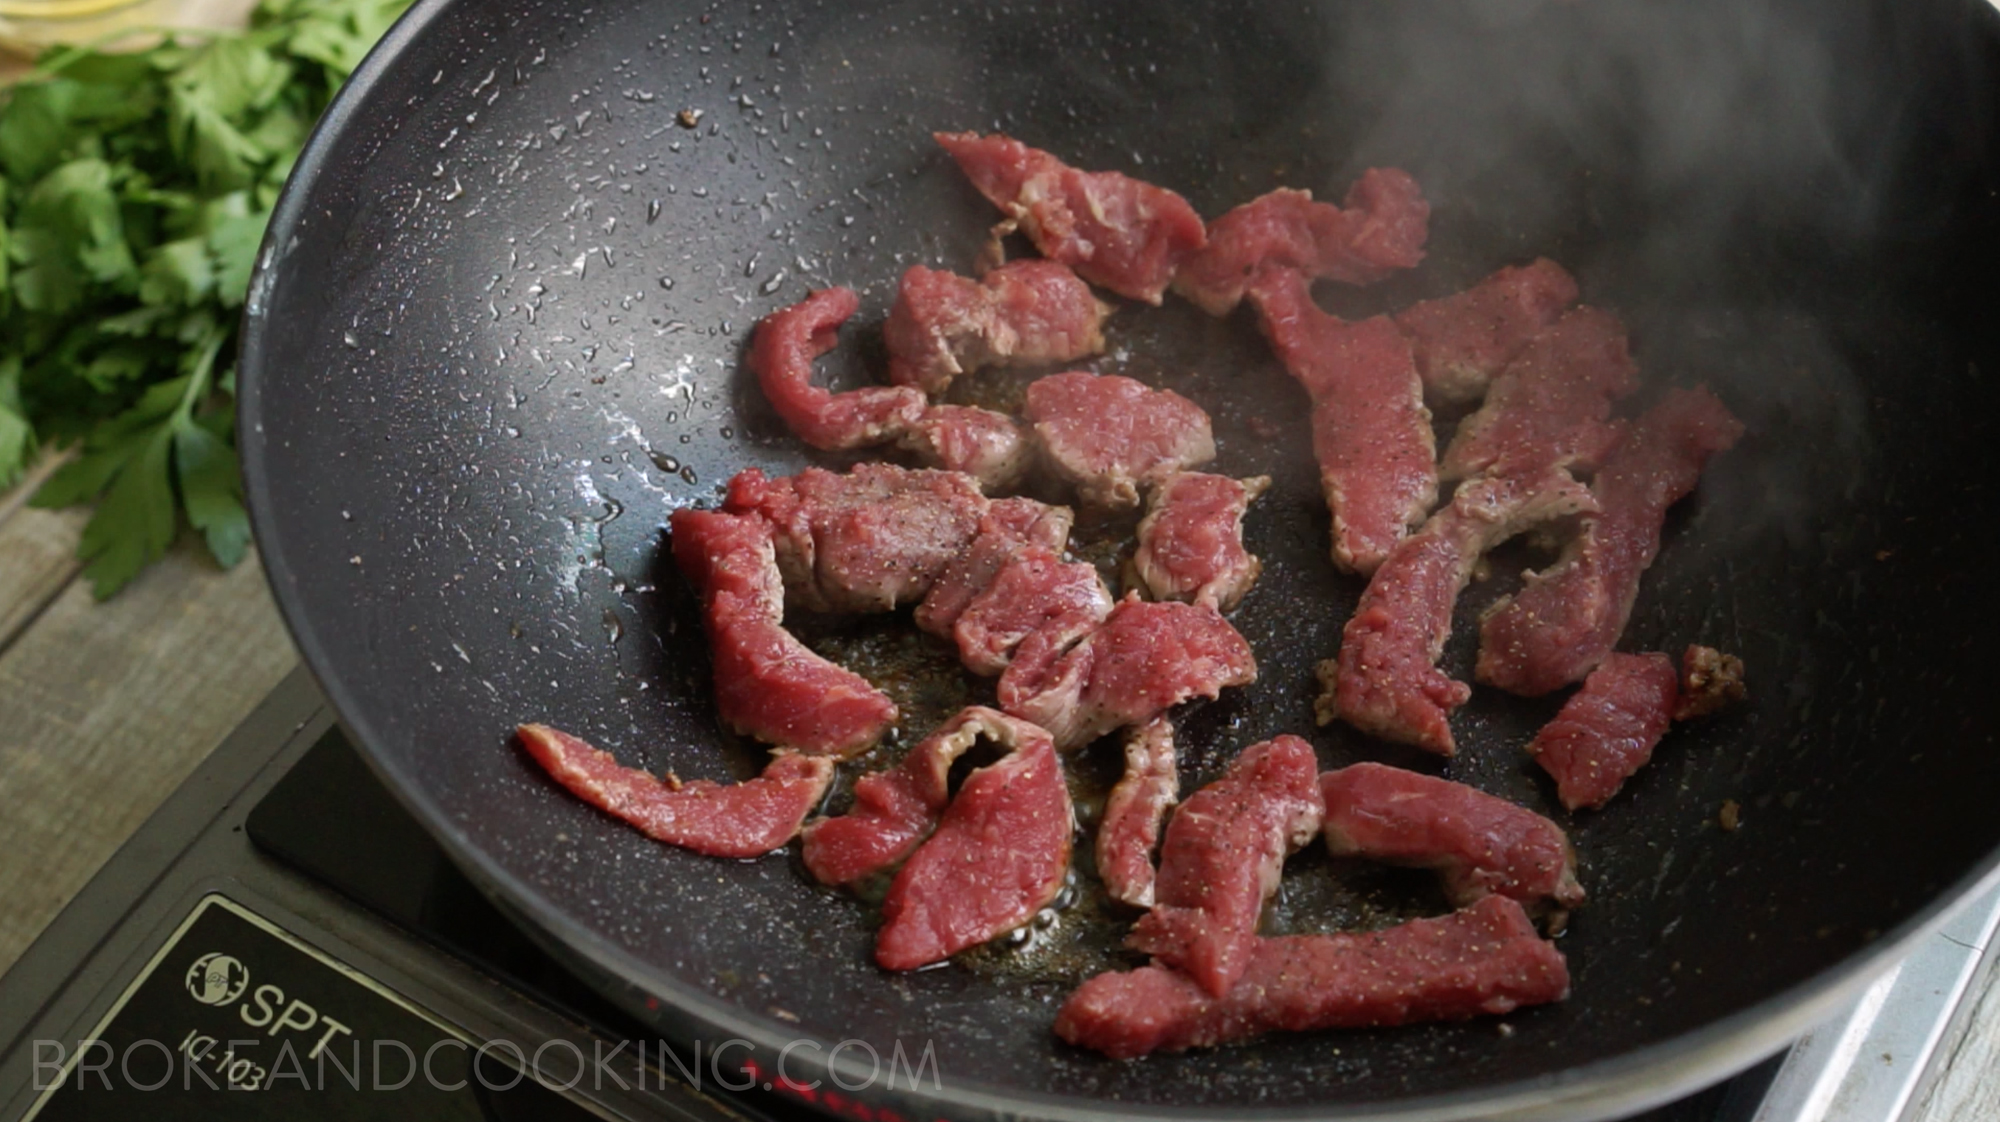 Skinny Beef Stroganoff Recipe by Broke and Cooking - www.brokeandcooking.com